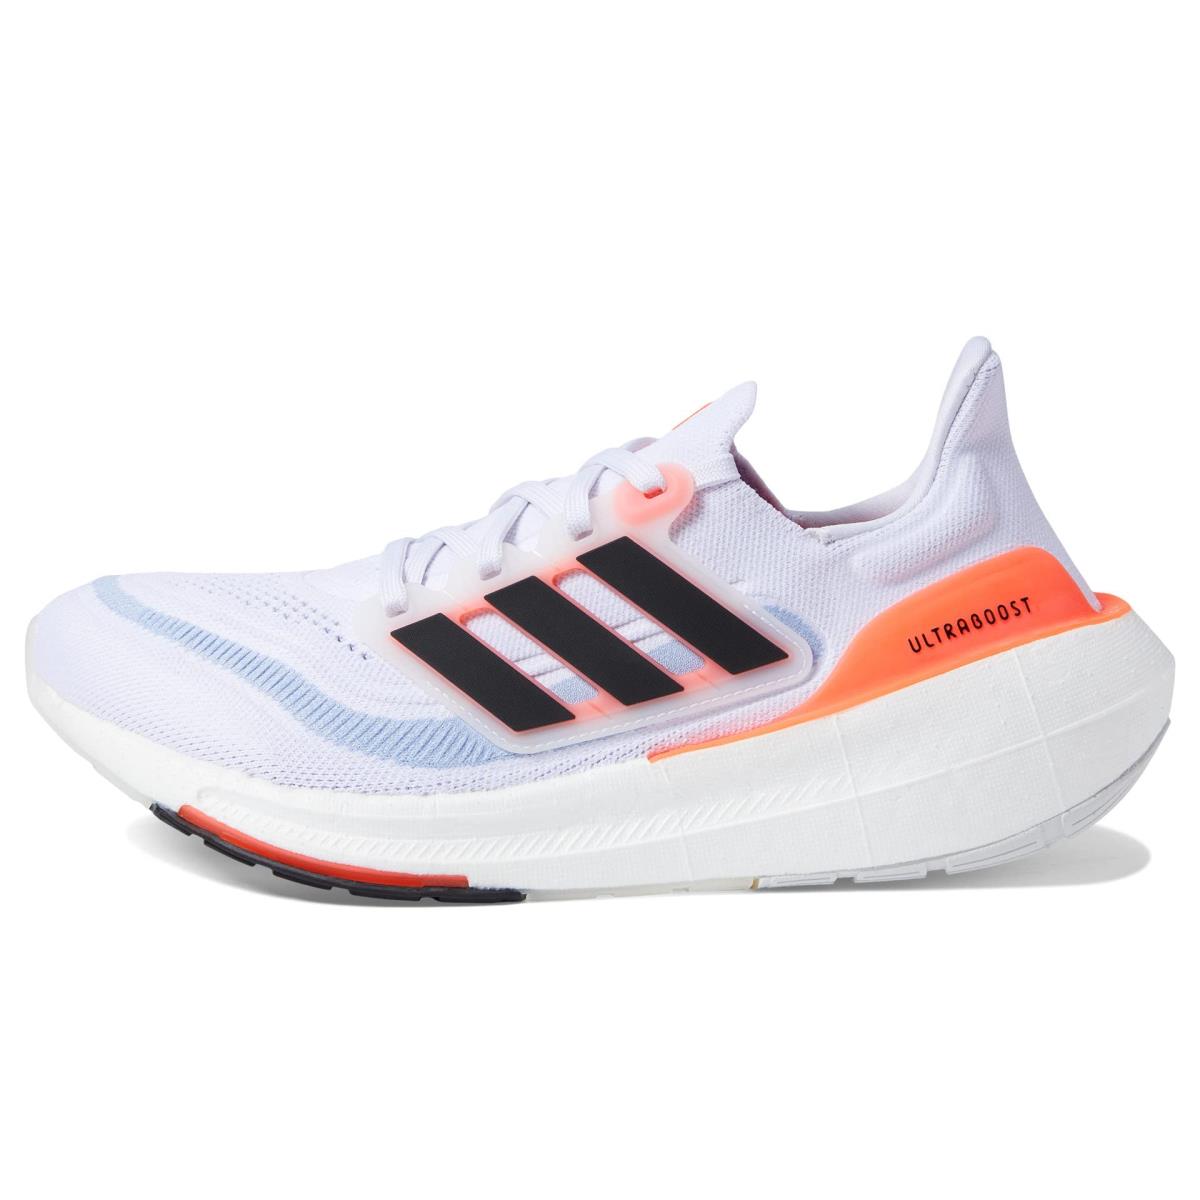 Adidas Women`s Ultraboost Light Running Shoes Snea White/Black/Solar Red